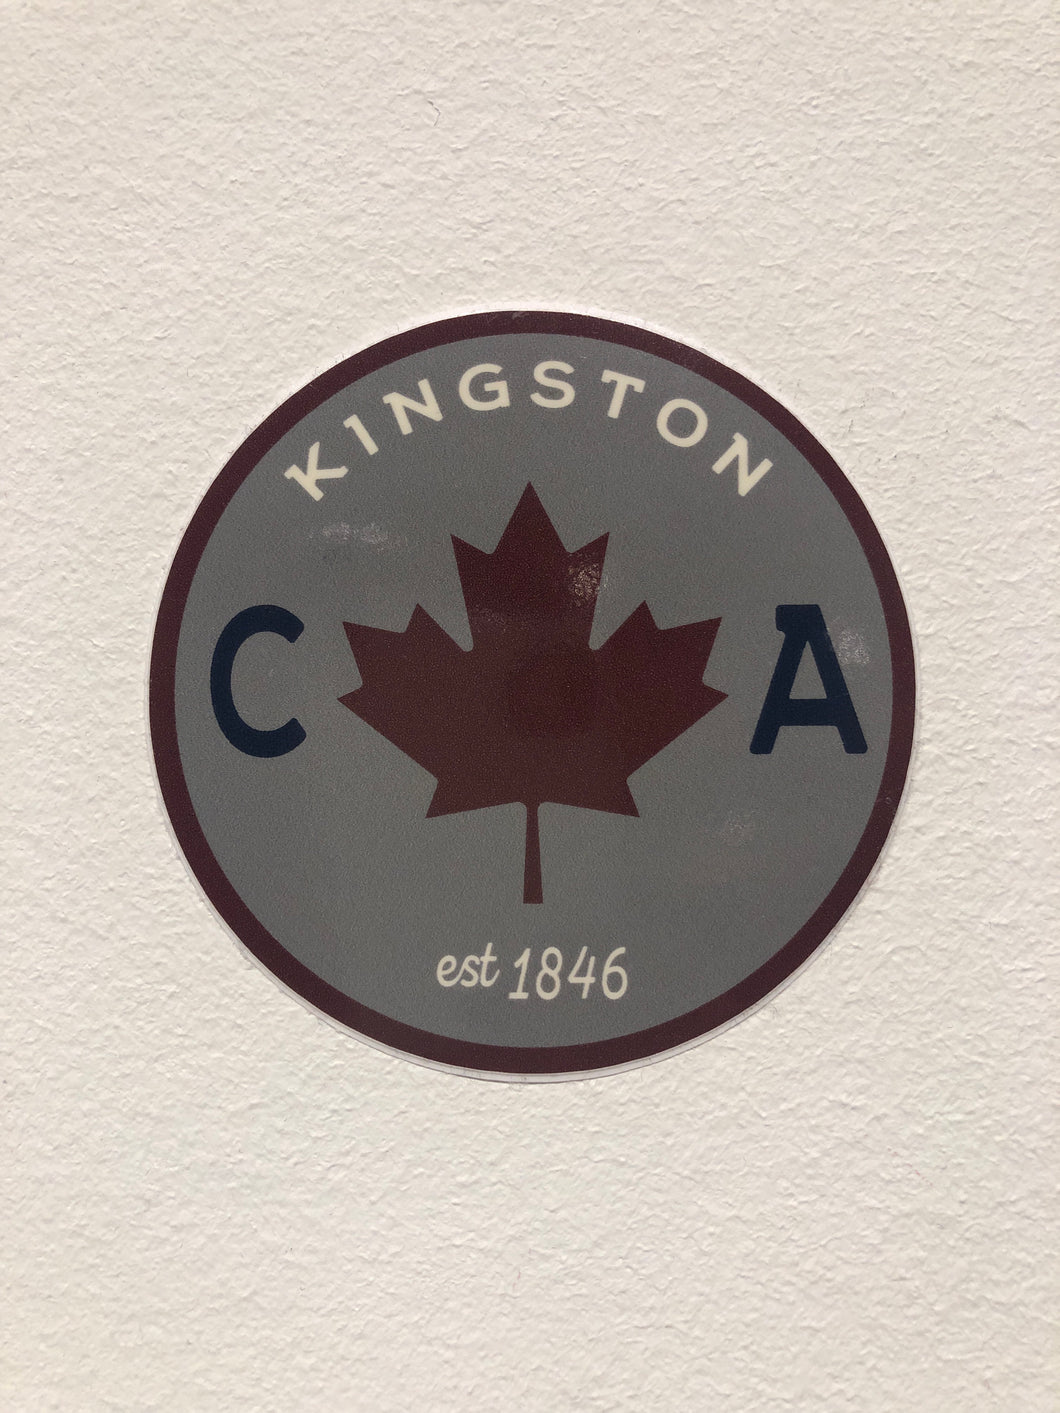 KINGSTON CANADA STICKER